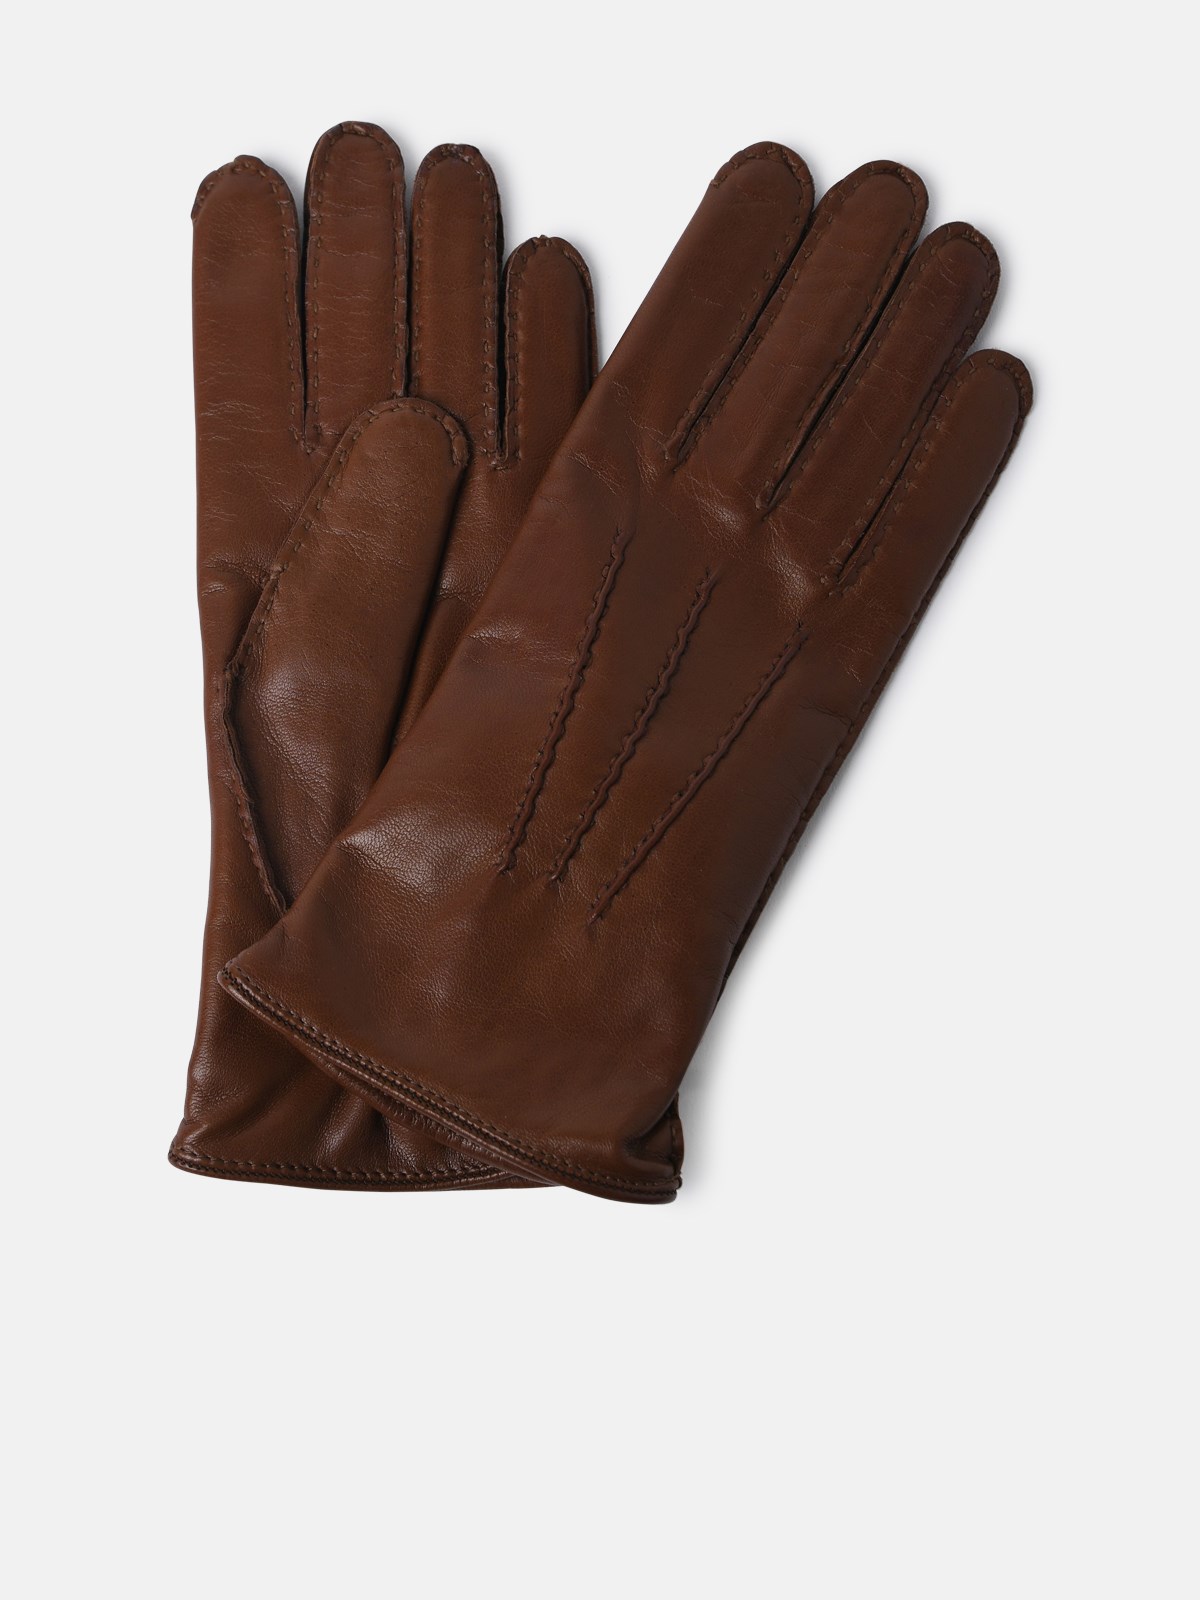 Sofia Gants Brown Nappa Leather Gloves